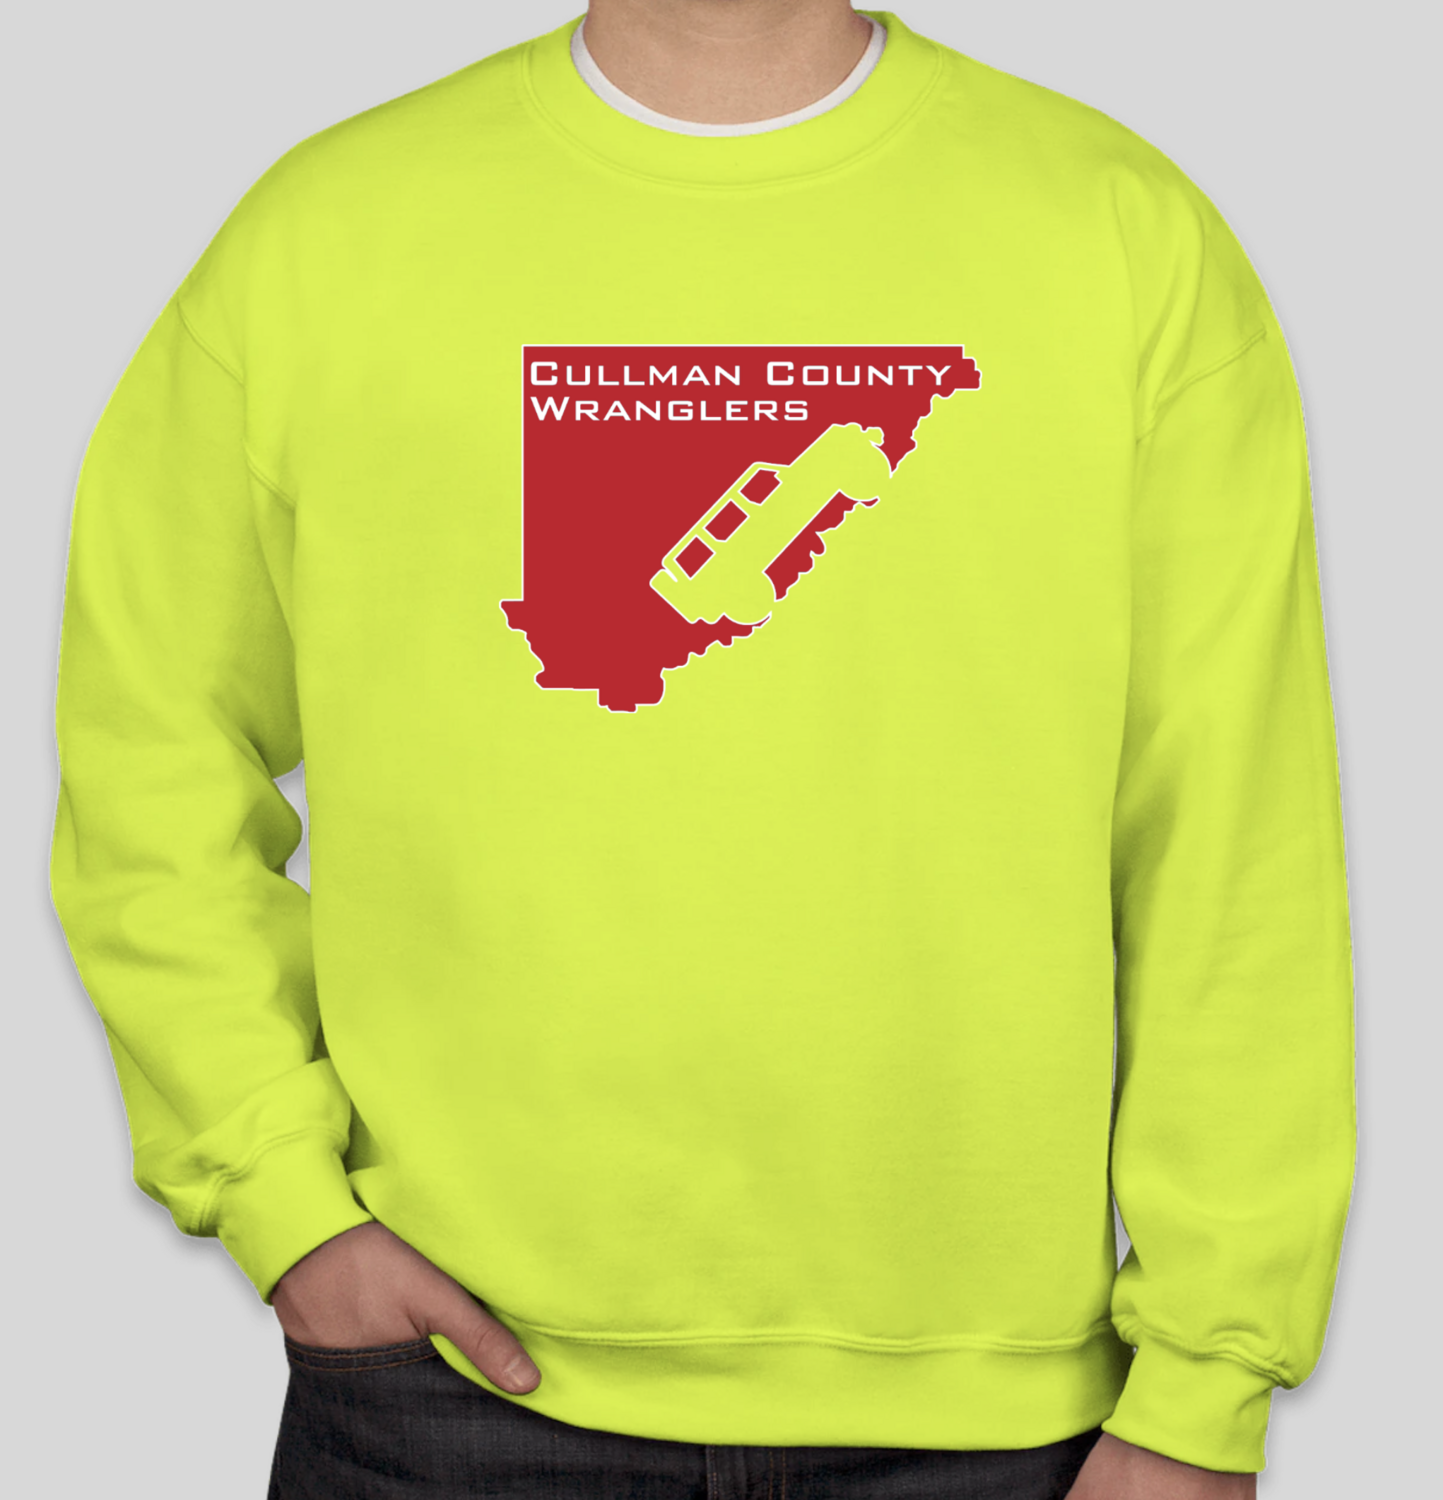 Cullman County Wranglers Crewneck Sweatshirt - Red & Safety Green